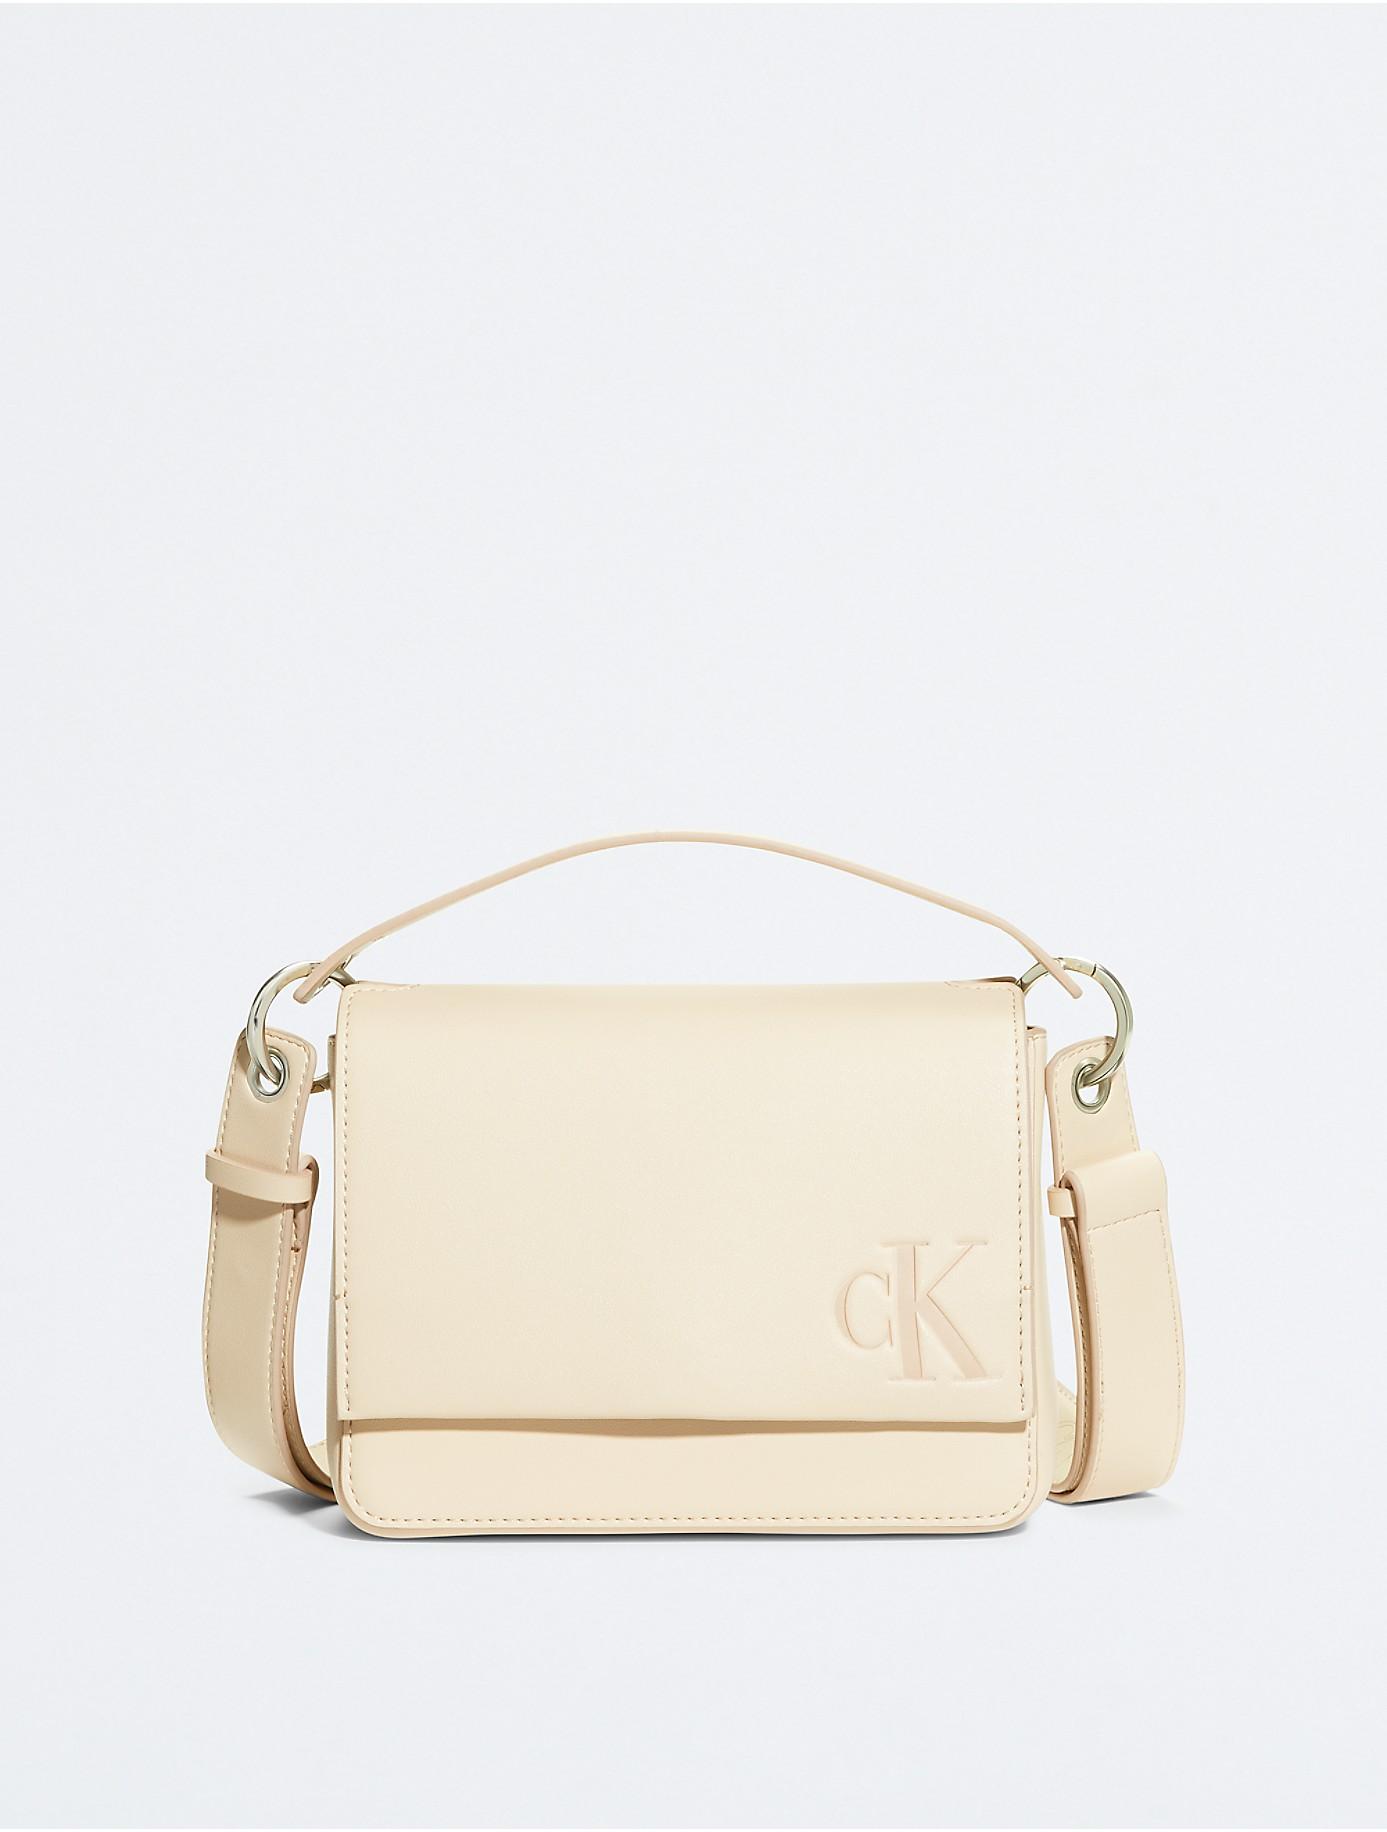 Calvin Klein CK Shoulder Handbag  Calvin klein handbags, Shoulder